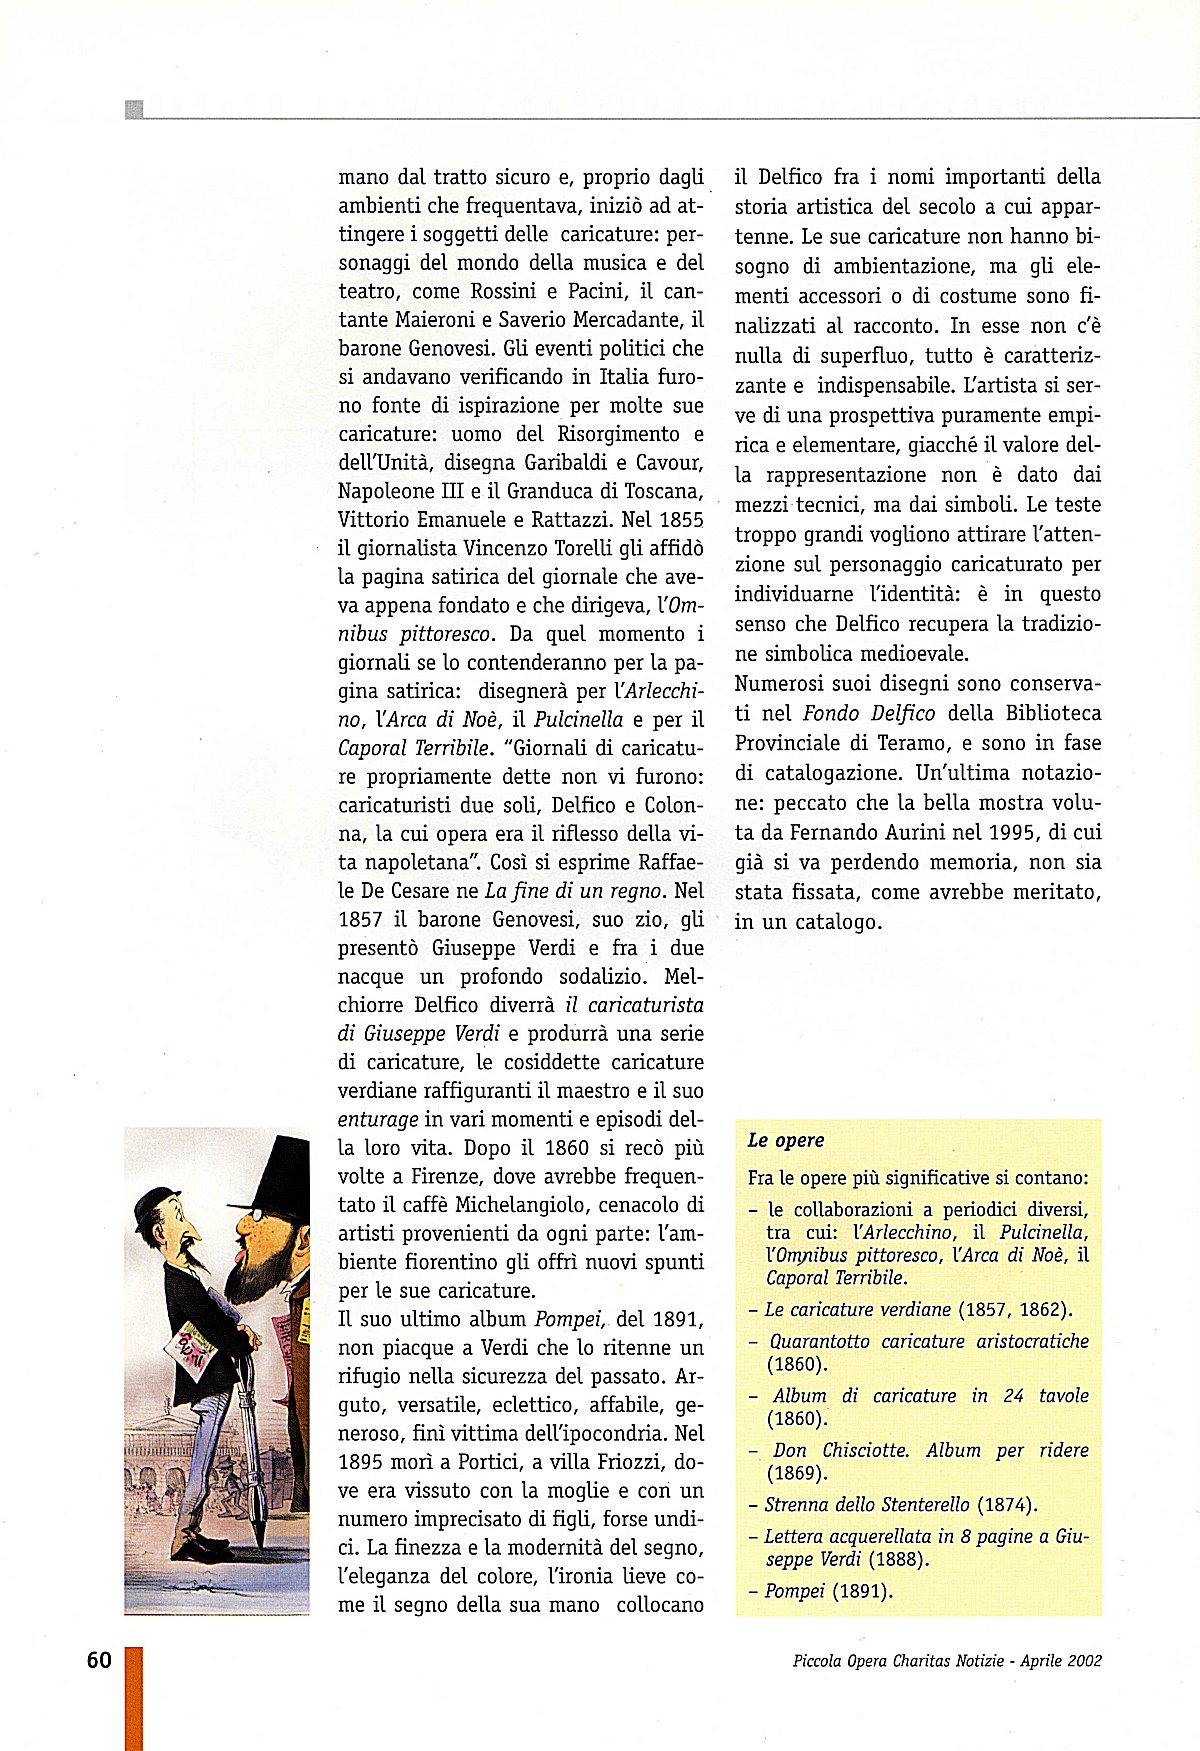 "Piccola Opera Charitas", anno II, n. 1, gennaio-aprile 2002, pag. 60